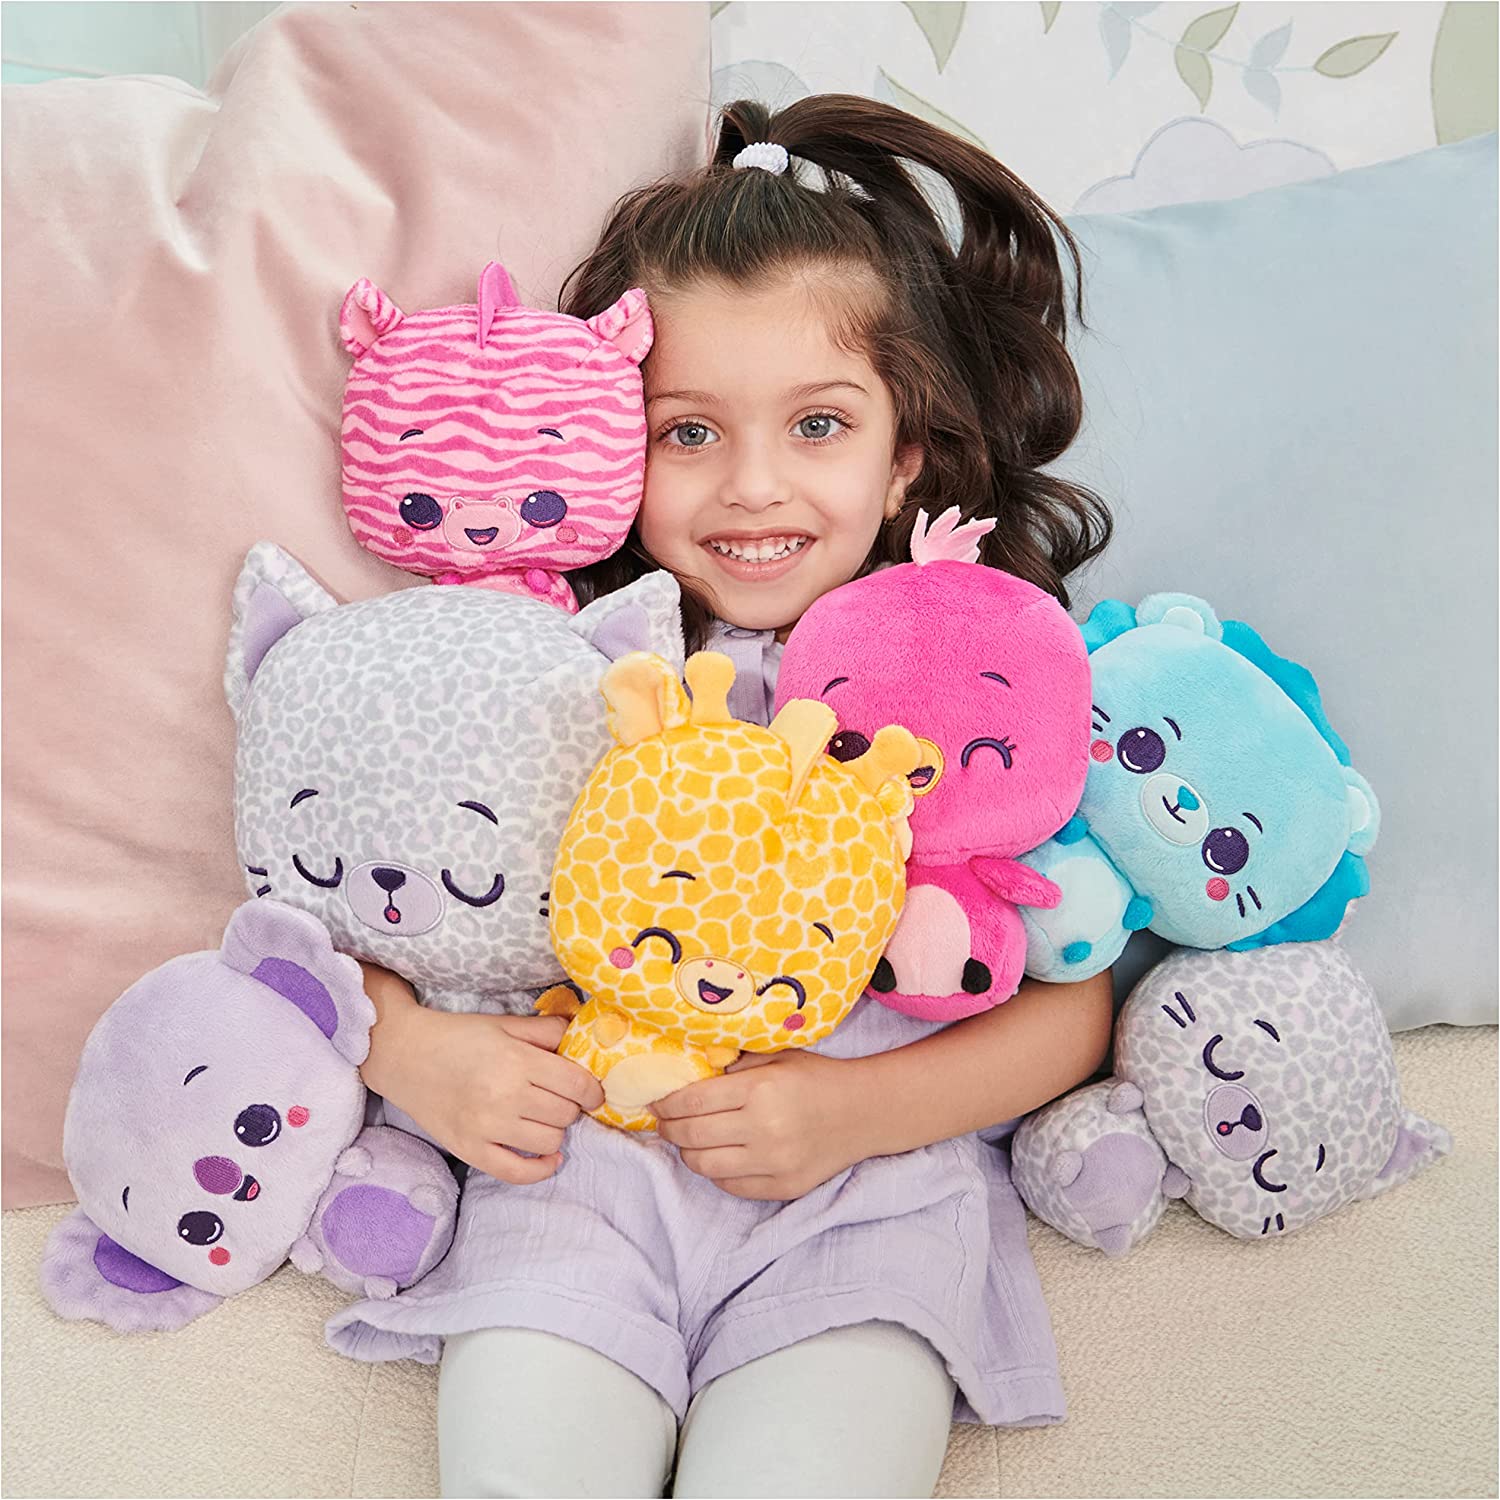 GUND Drops, Harli Hops, Expressive Premium Stuffed Animal Soft Plush Pet, Pink, 6” - Stuffed Animals Heretoserveyou